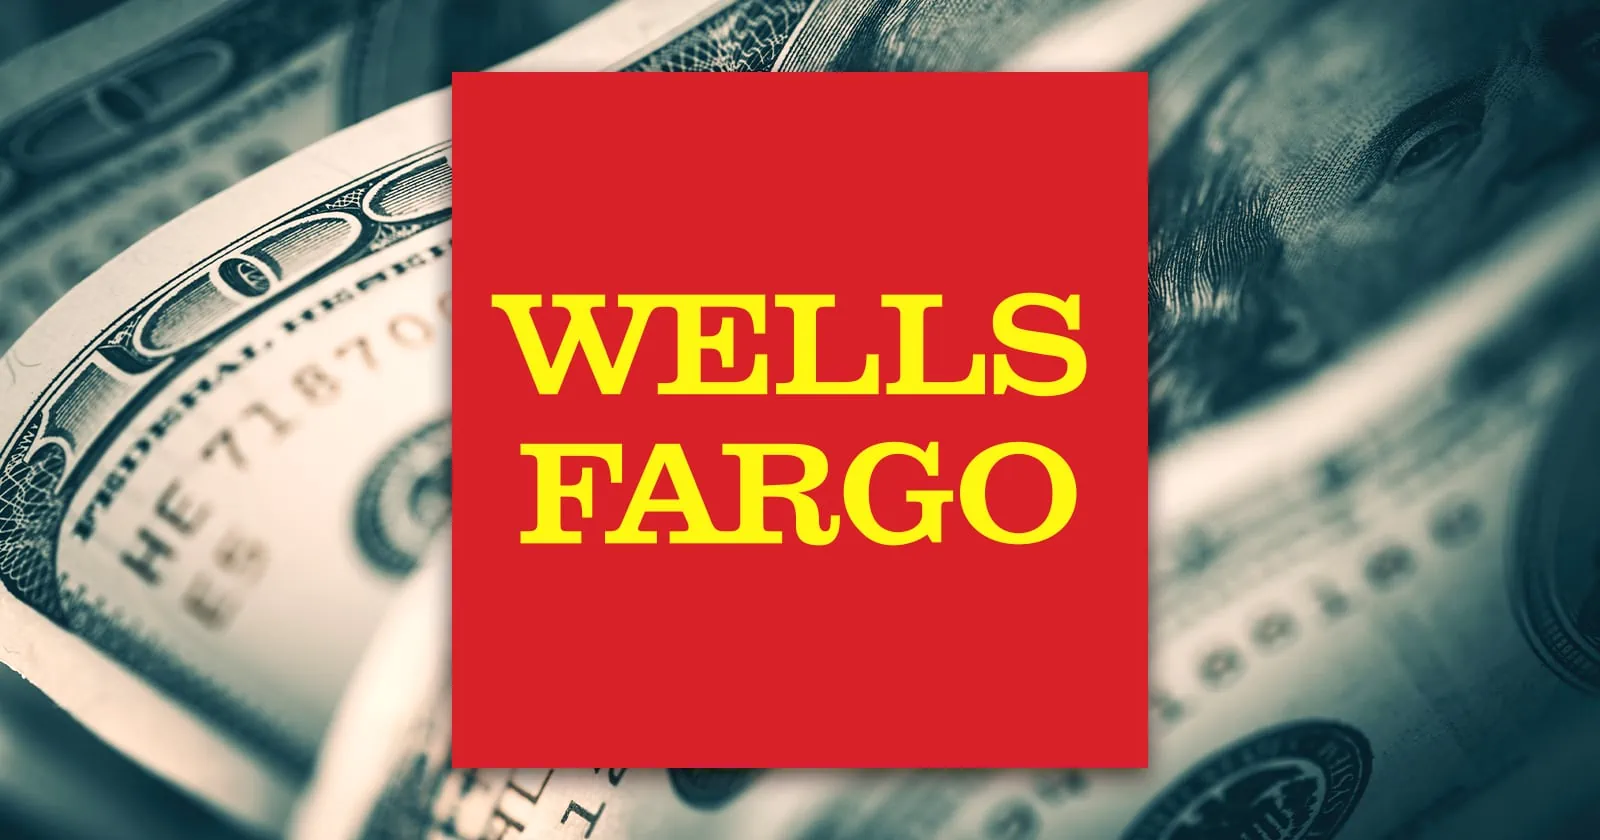 Wells Fargo Bloquea Cuentas a Cubanos Residentes en Estados Unidos